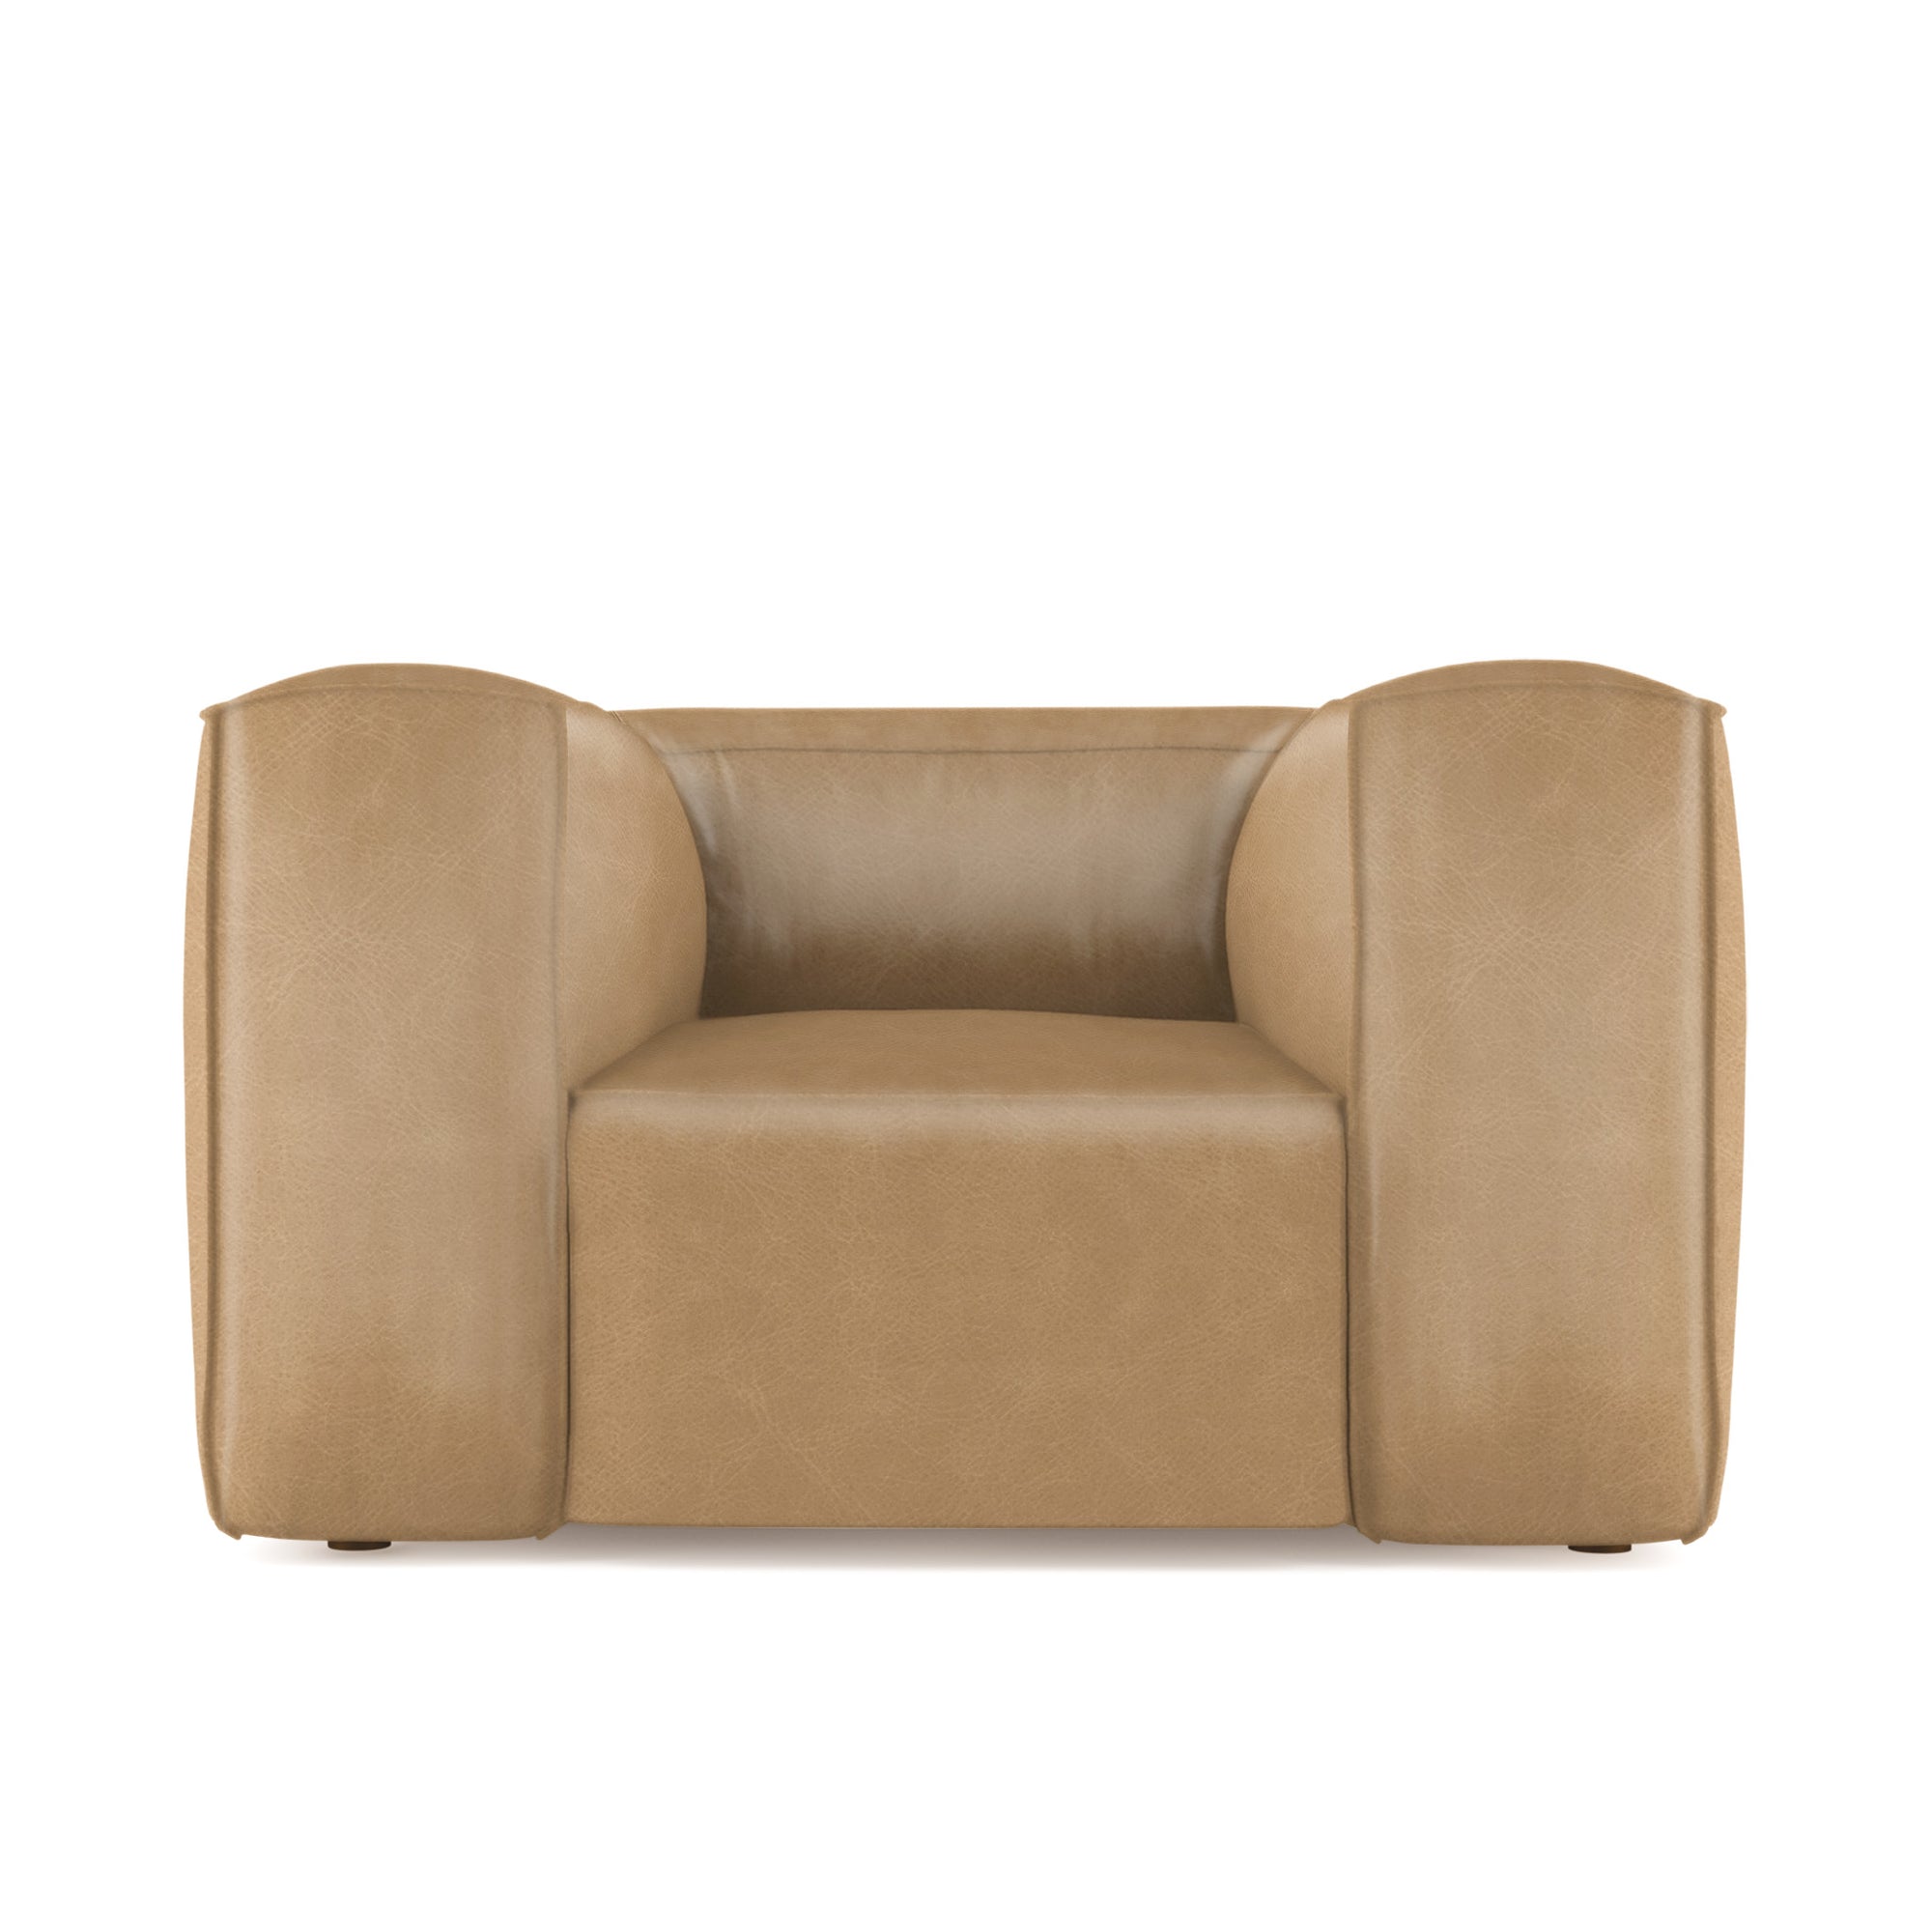 Varick Chair - Marzipan Vintage Leather